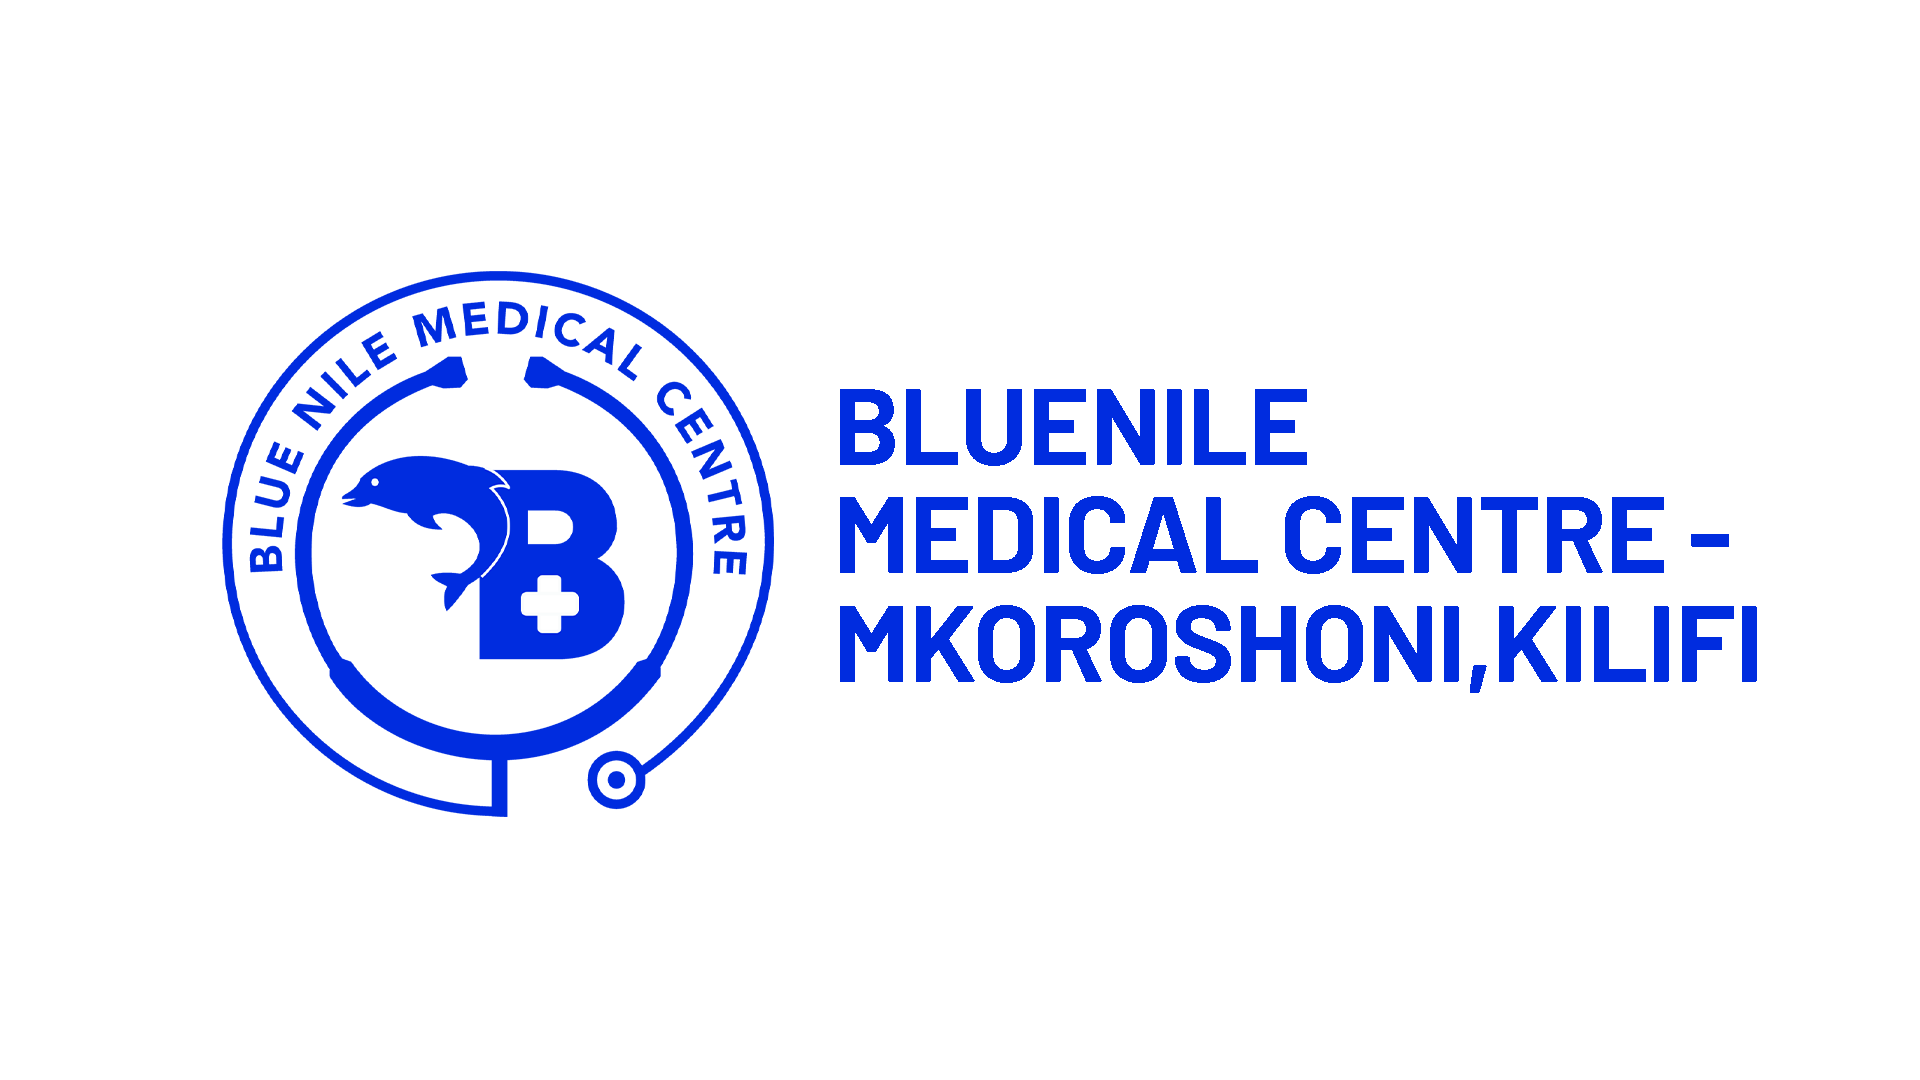 Blue Nile Medical Centre